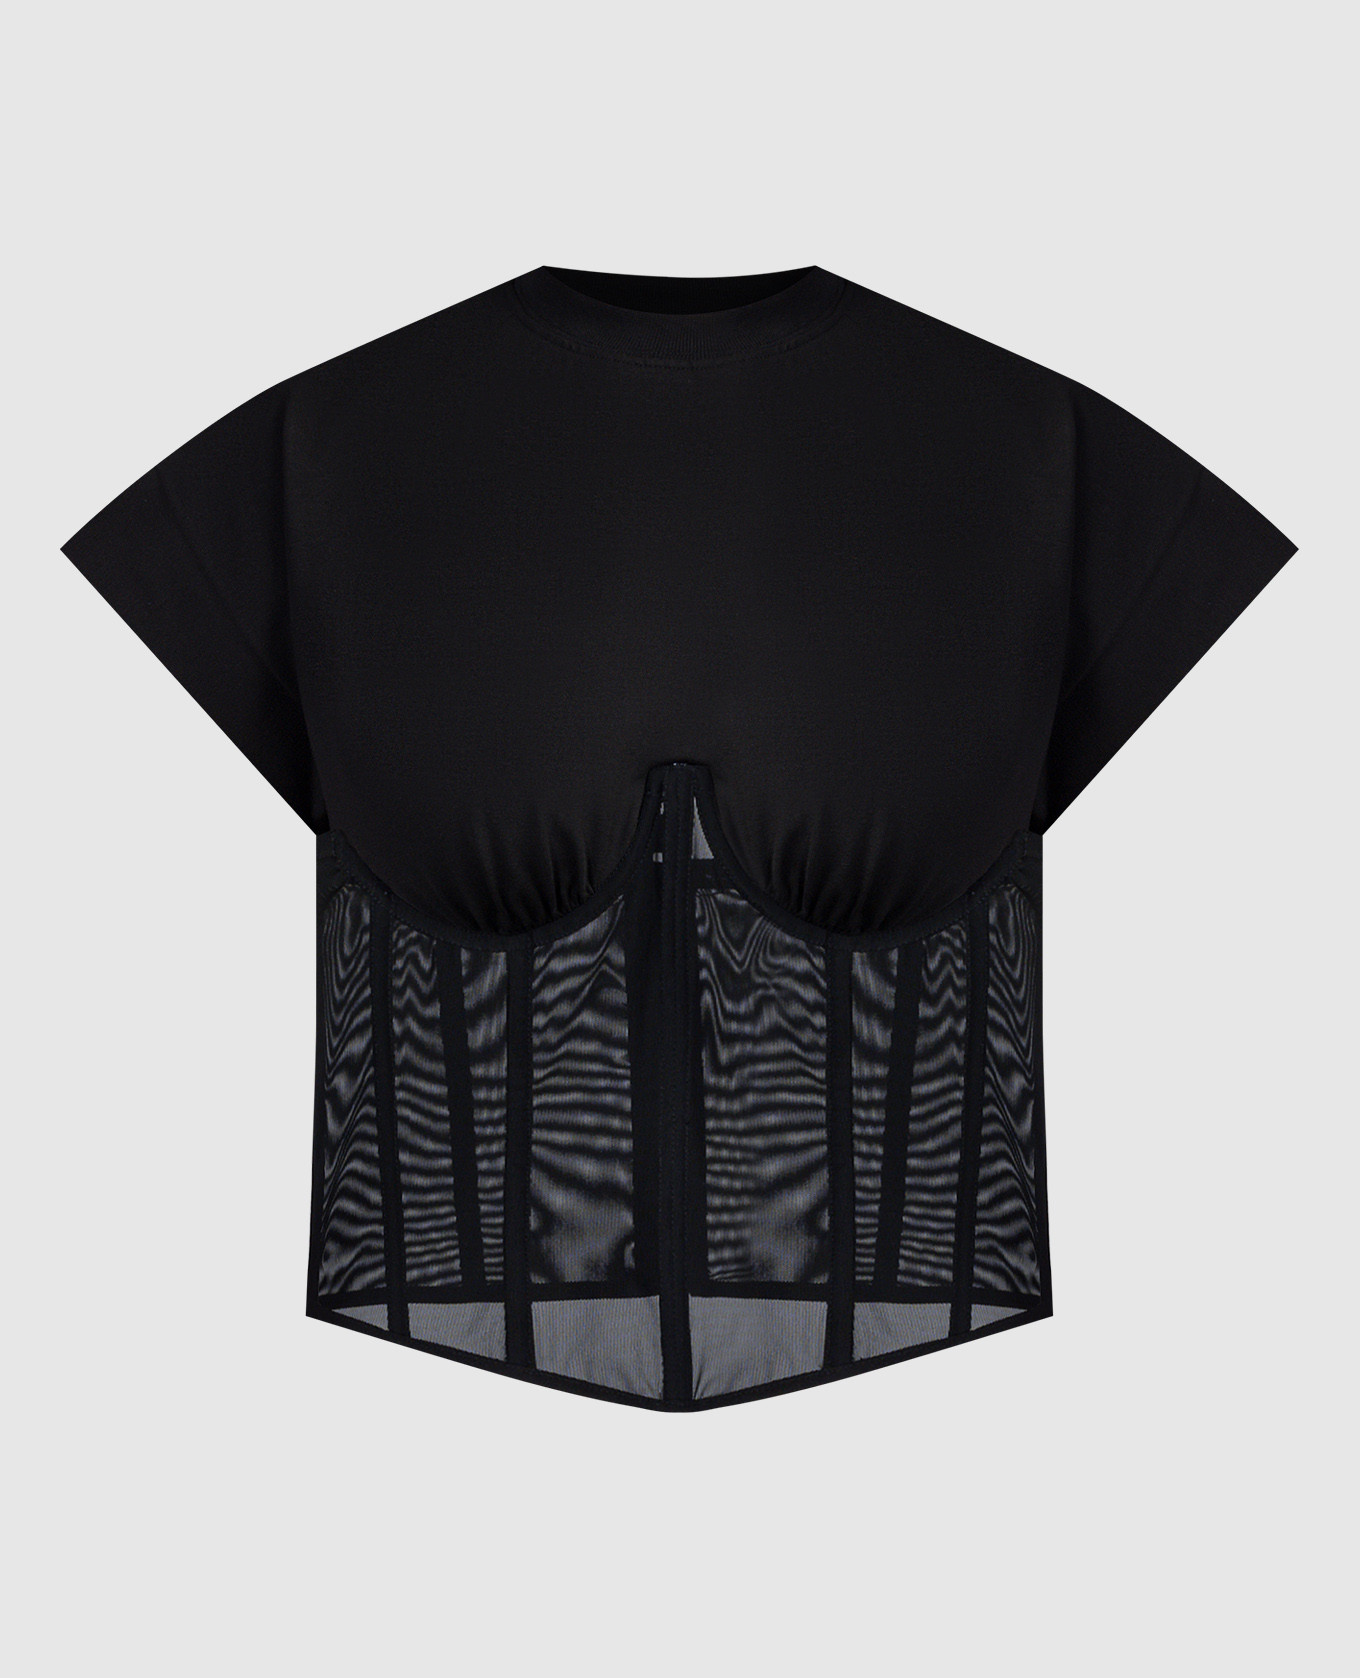 Black corset T-shirt